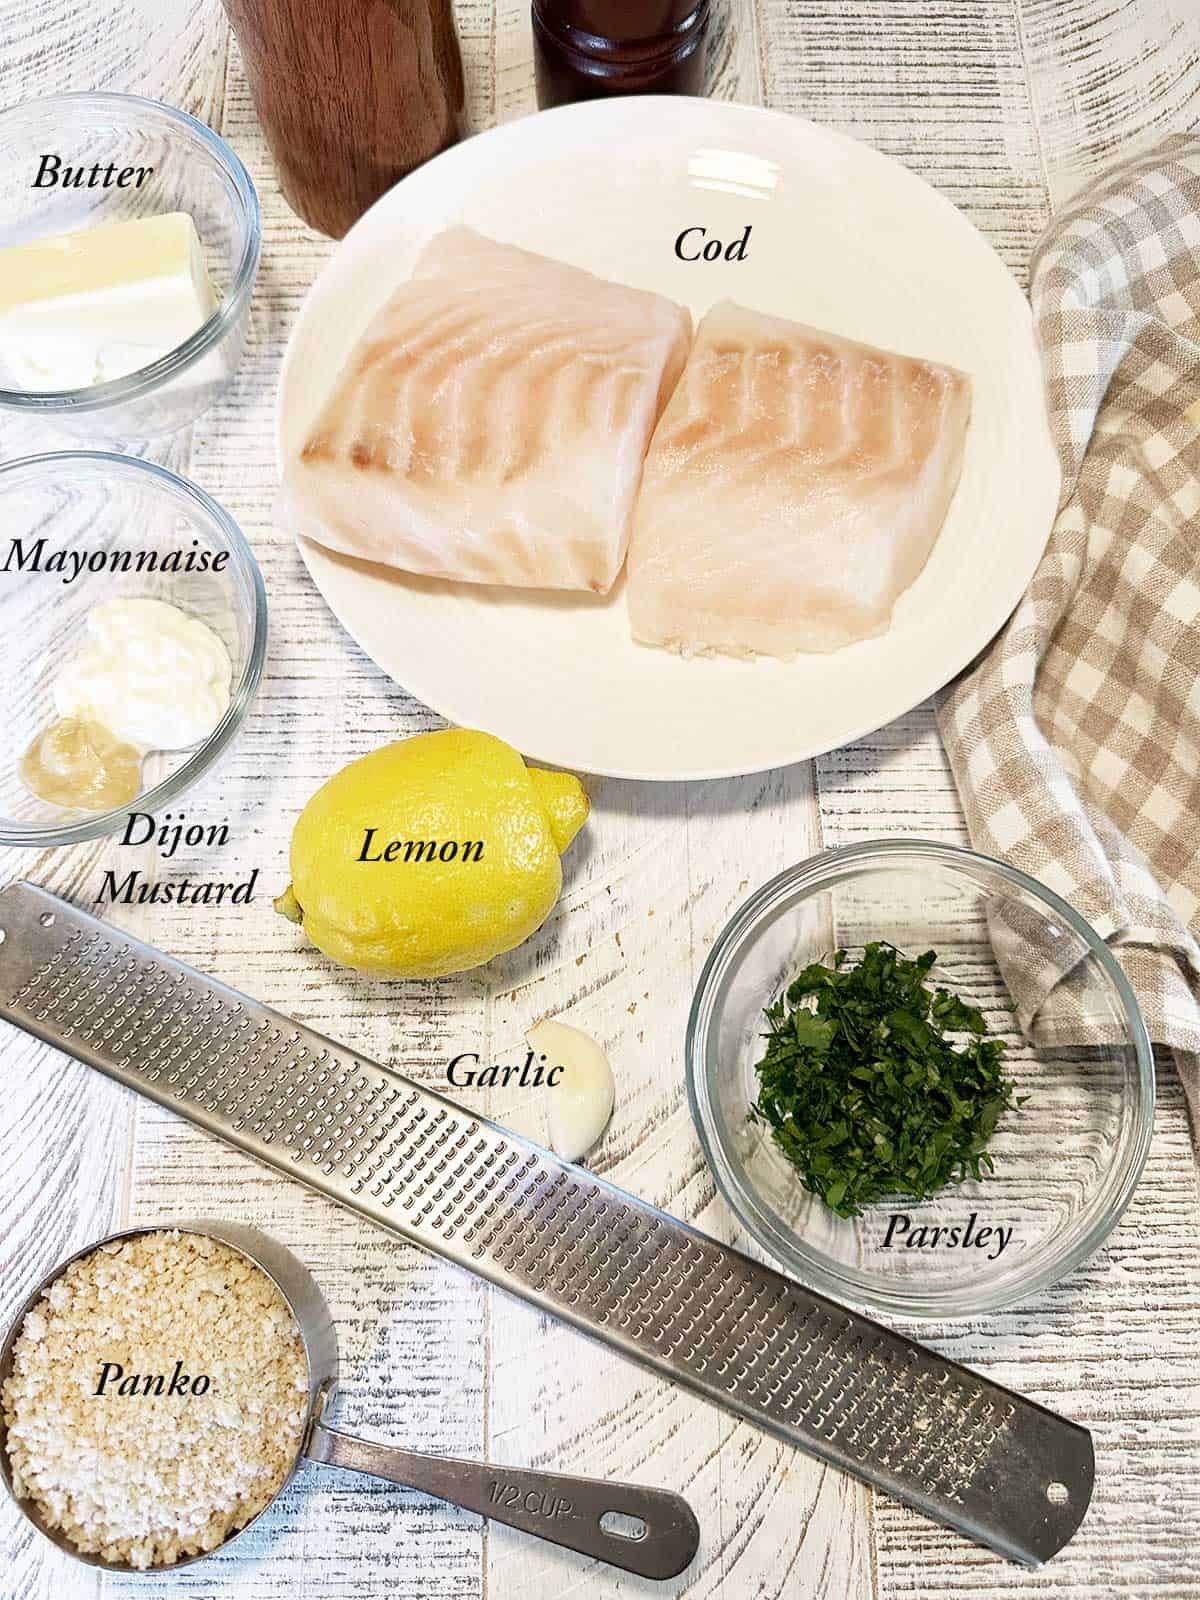 Ingredients to make panko-crusted cod.